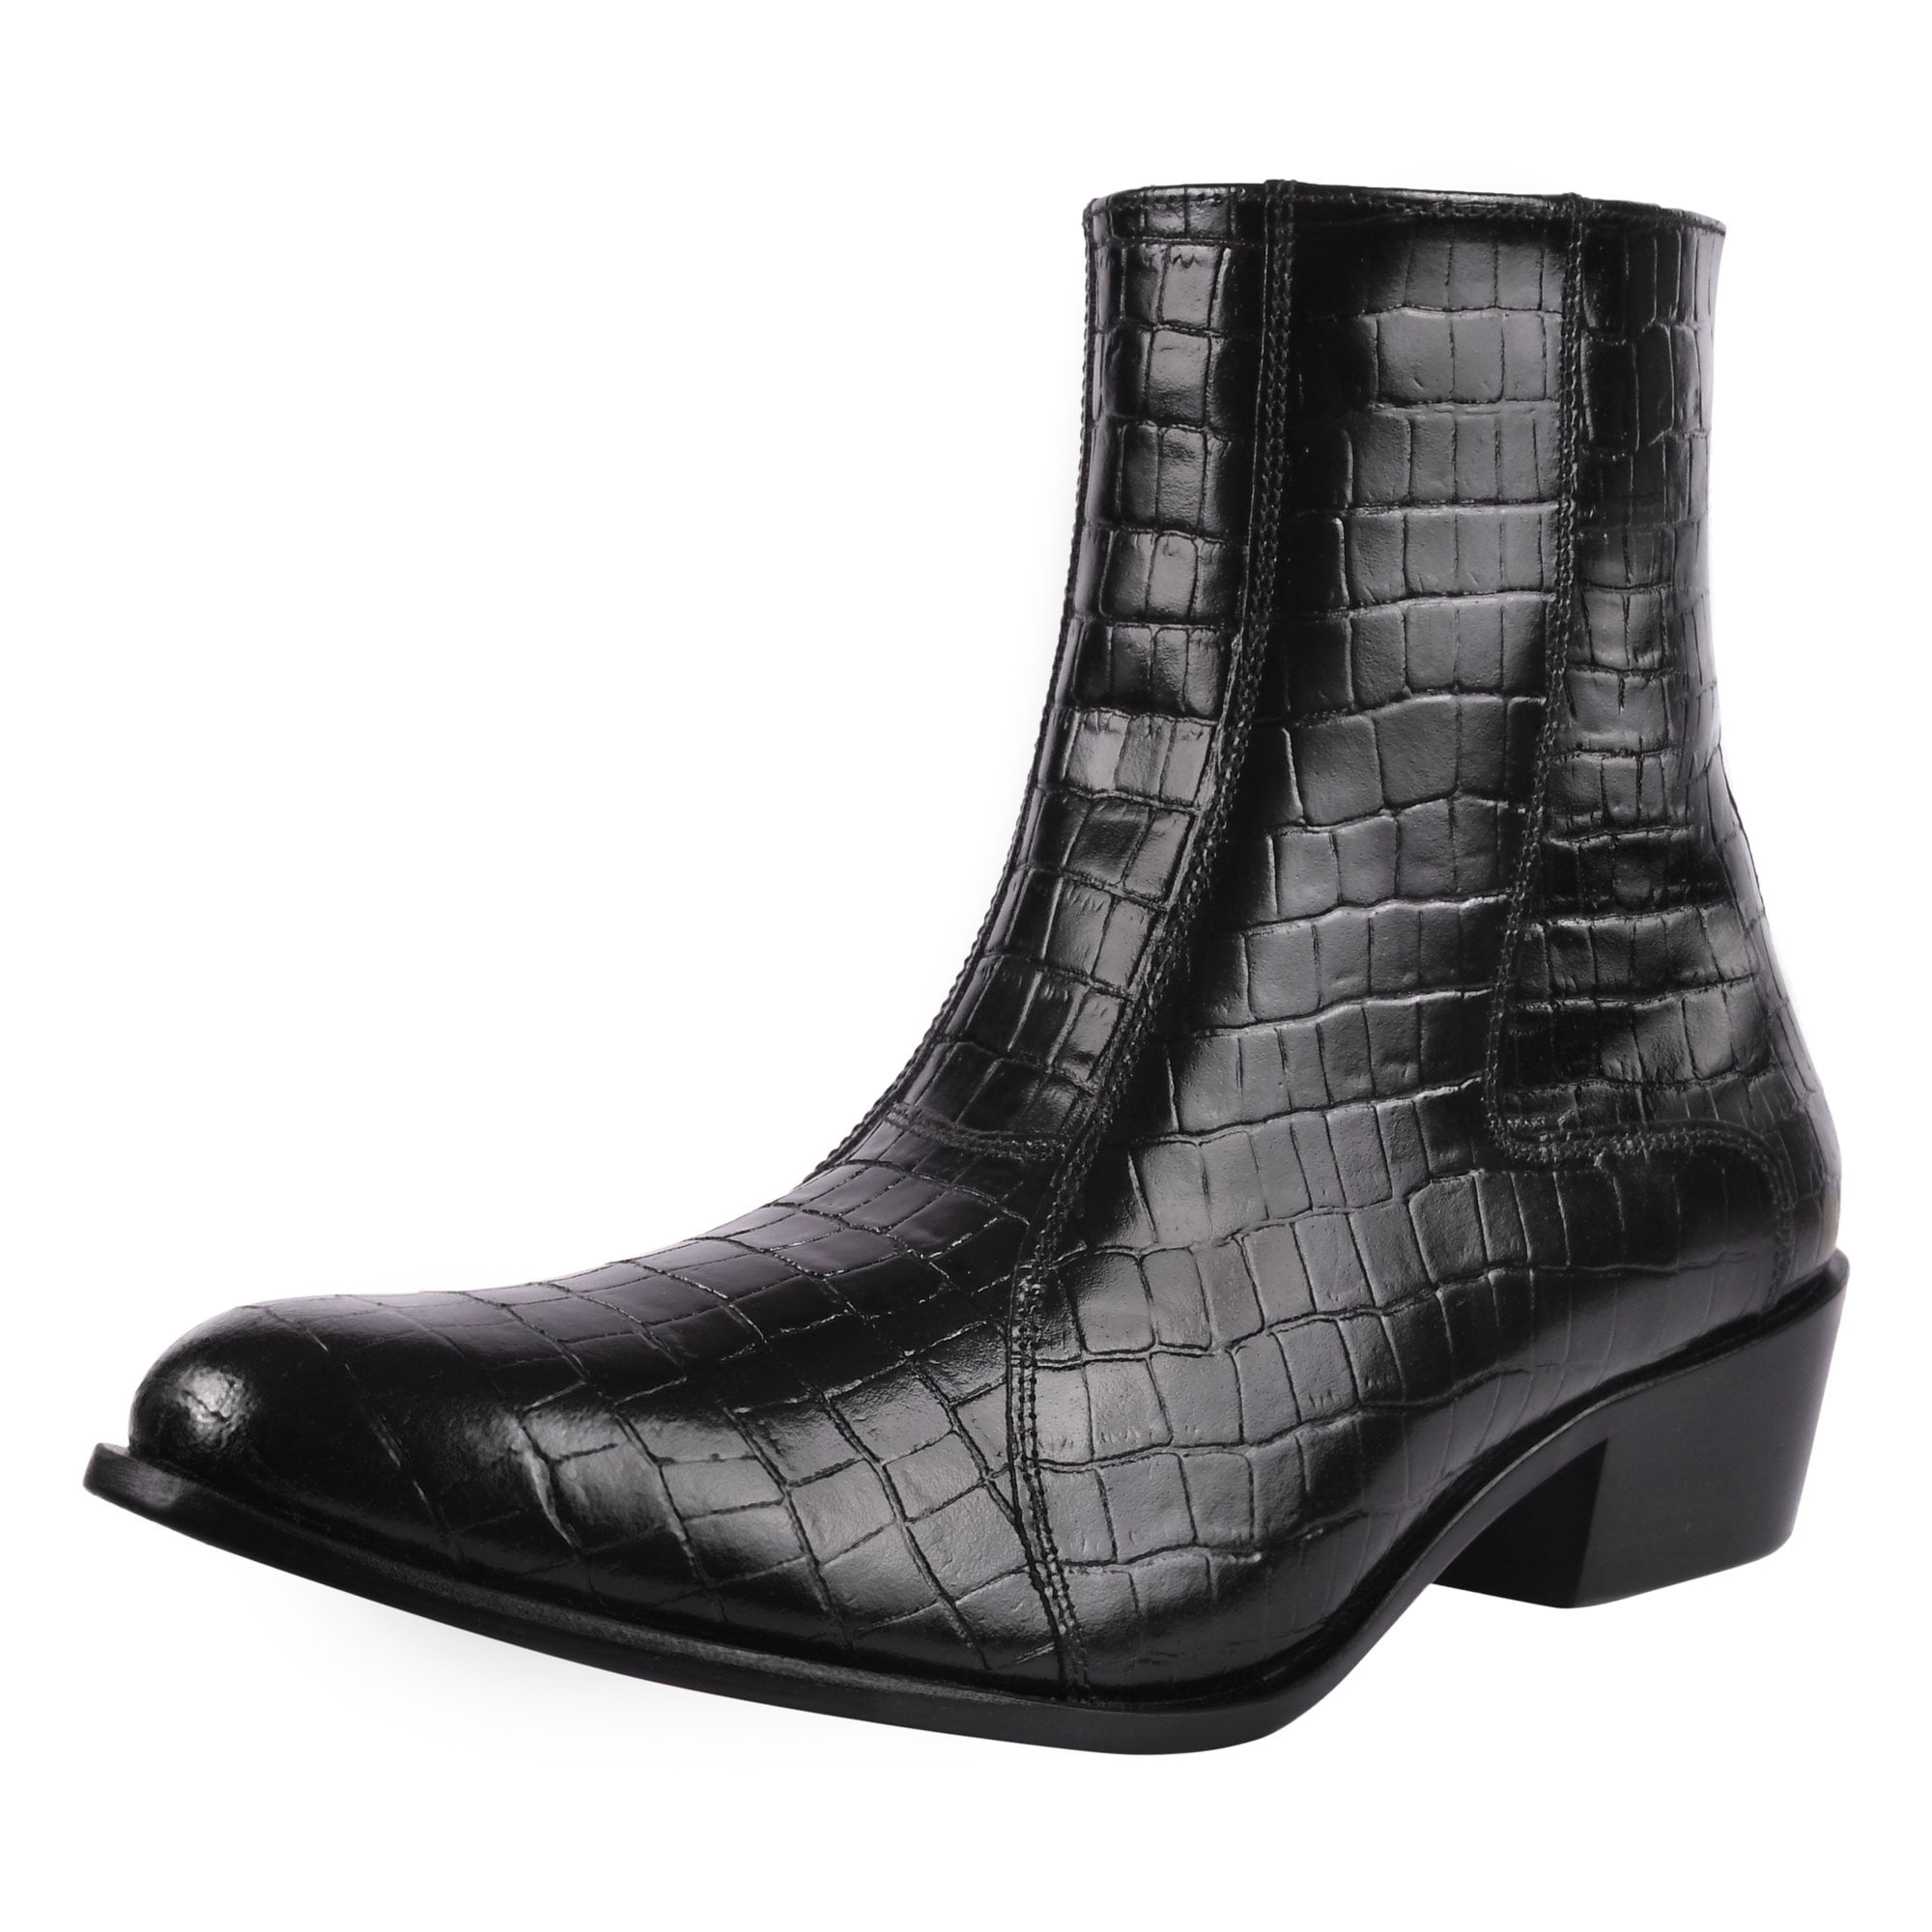 Mens D'Italo 6832 Leather Side Zip Cuban Heel Dress / Casual Boots Light  Brown | eBay